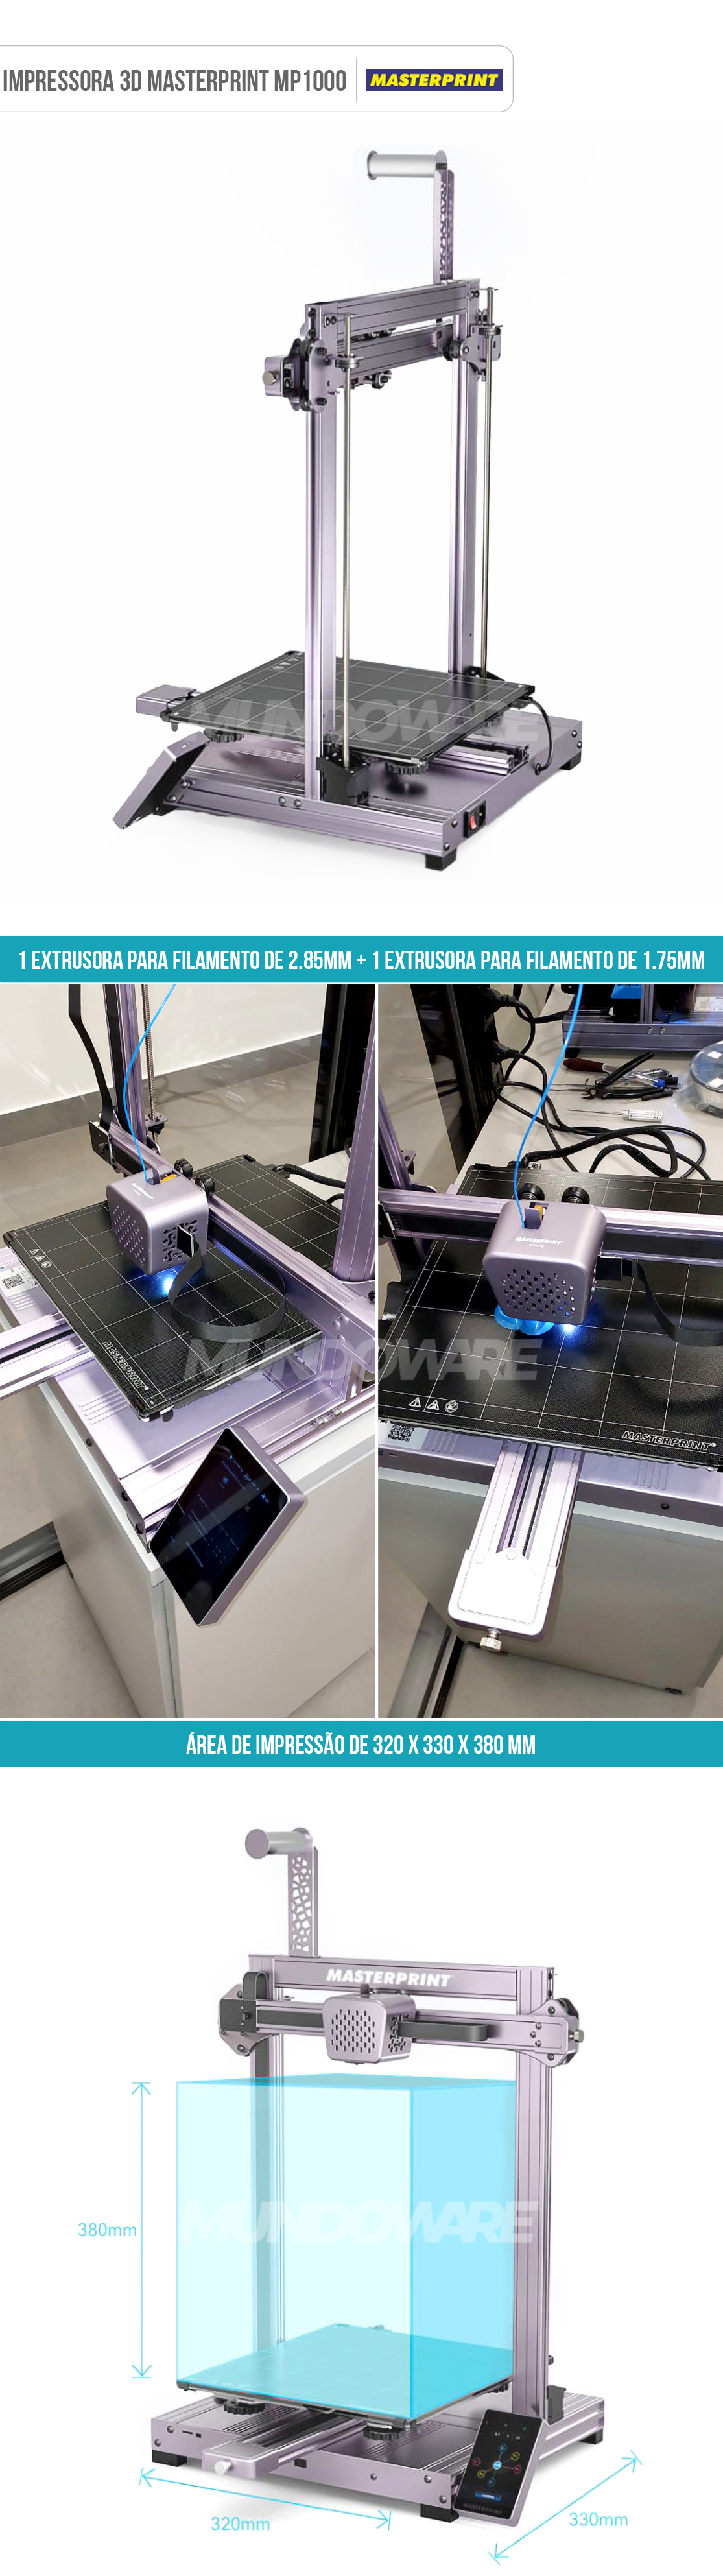 Impressora 3D Masterprint MP1000 com 1 extrusora para filamento de 2.85mm e 1 extrusora para filamento de 1.75mm